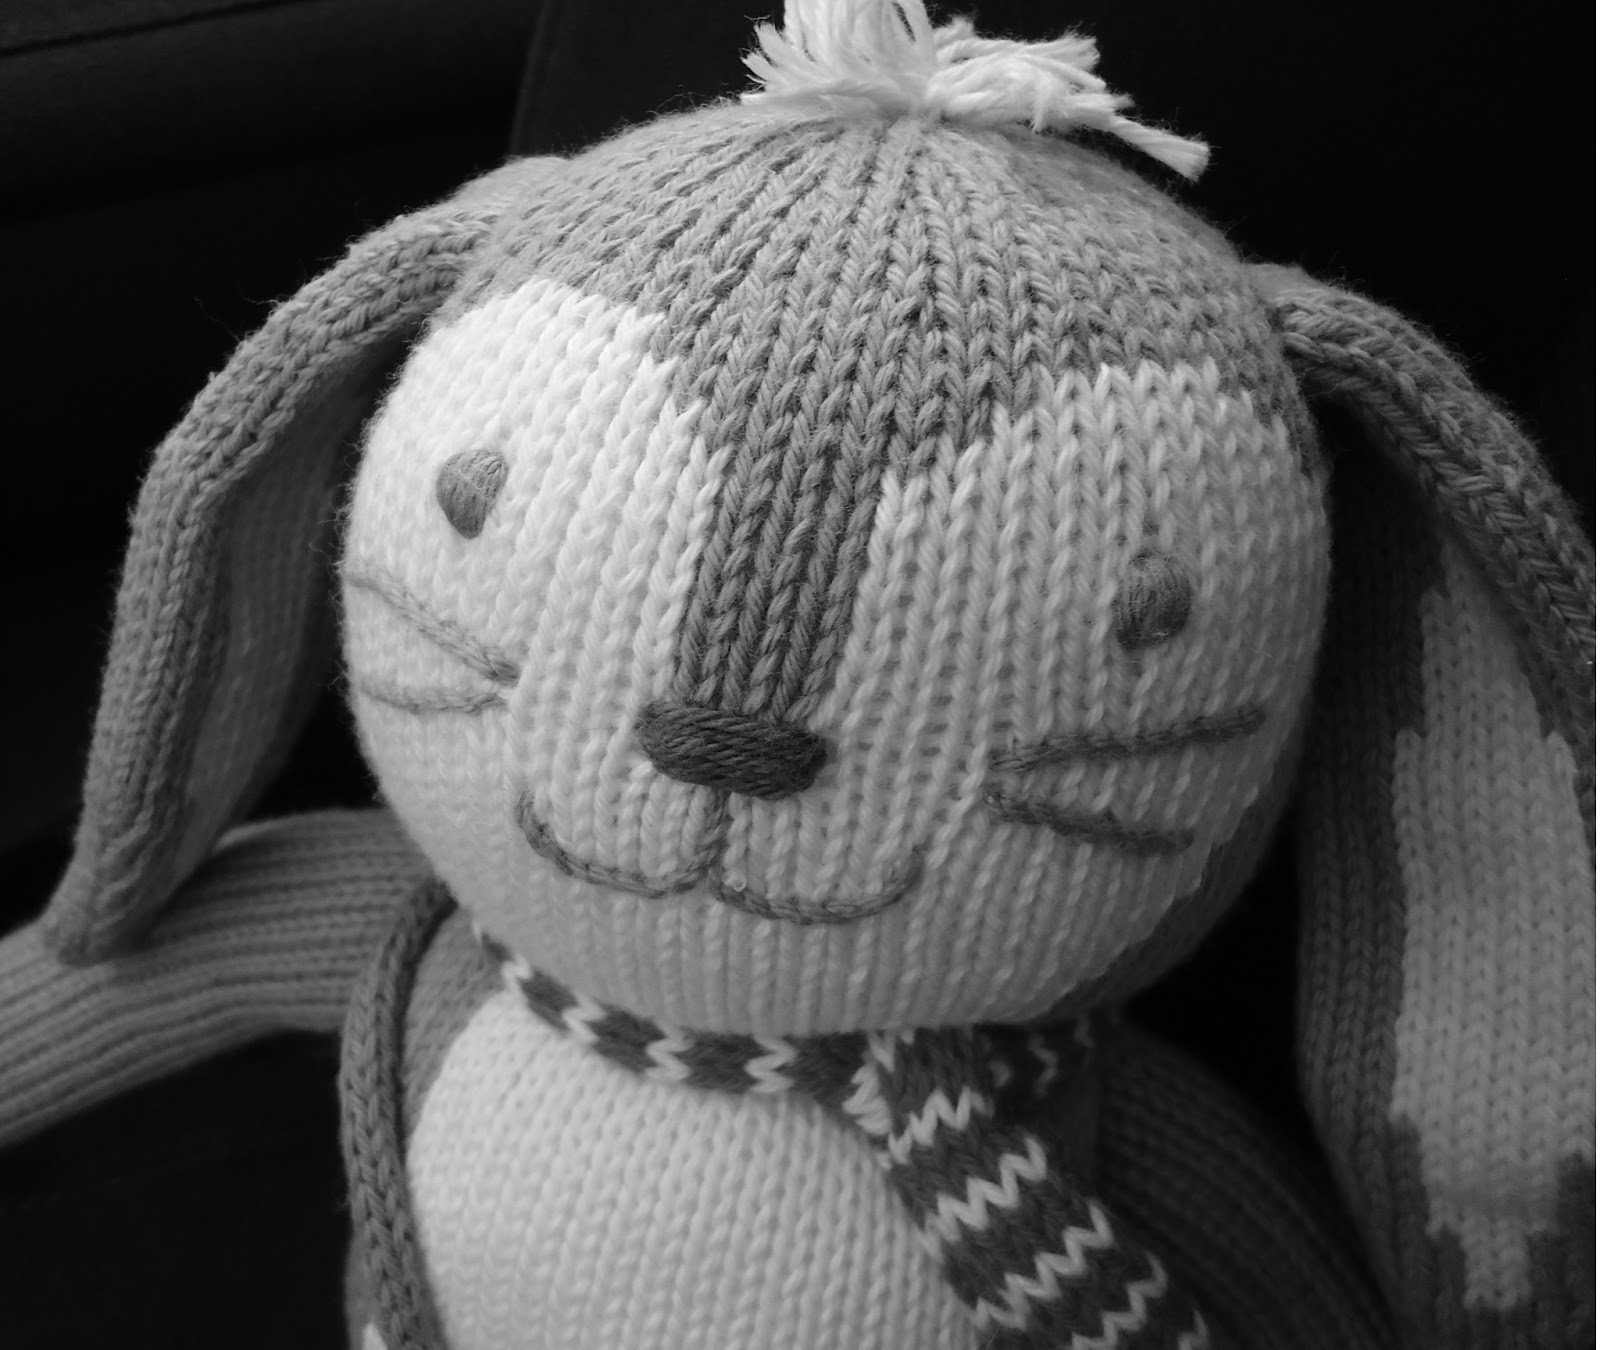 Pierre the Bunny